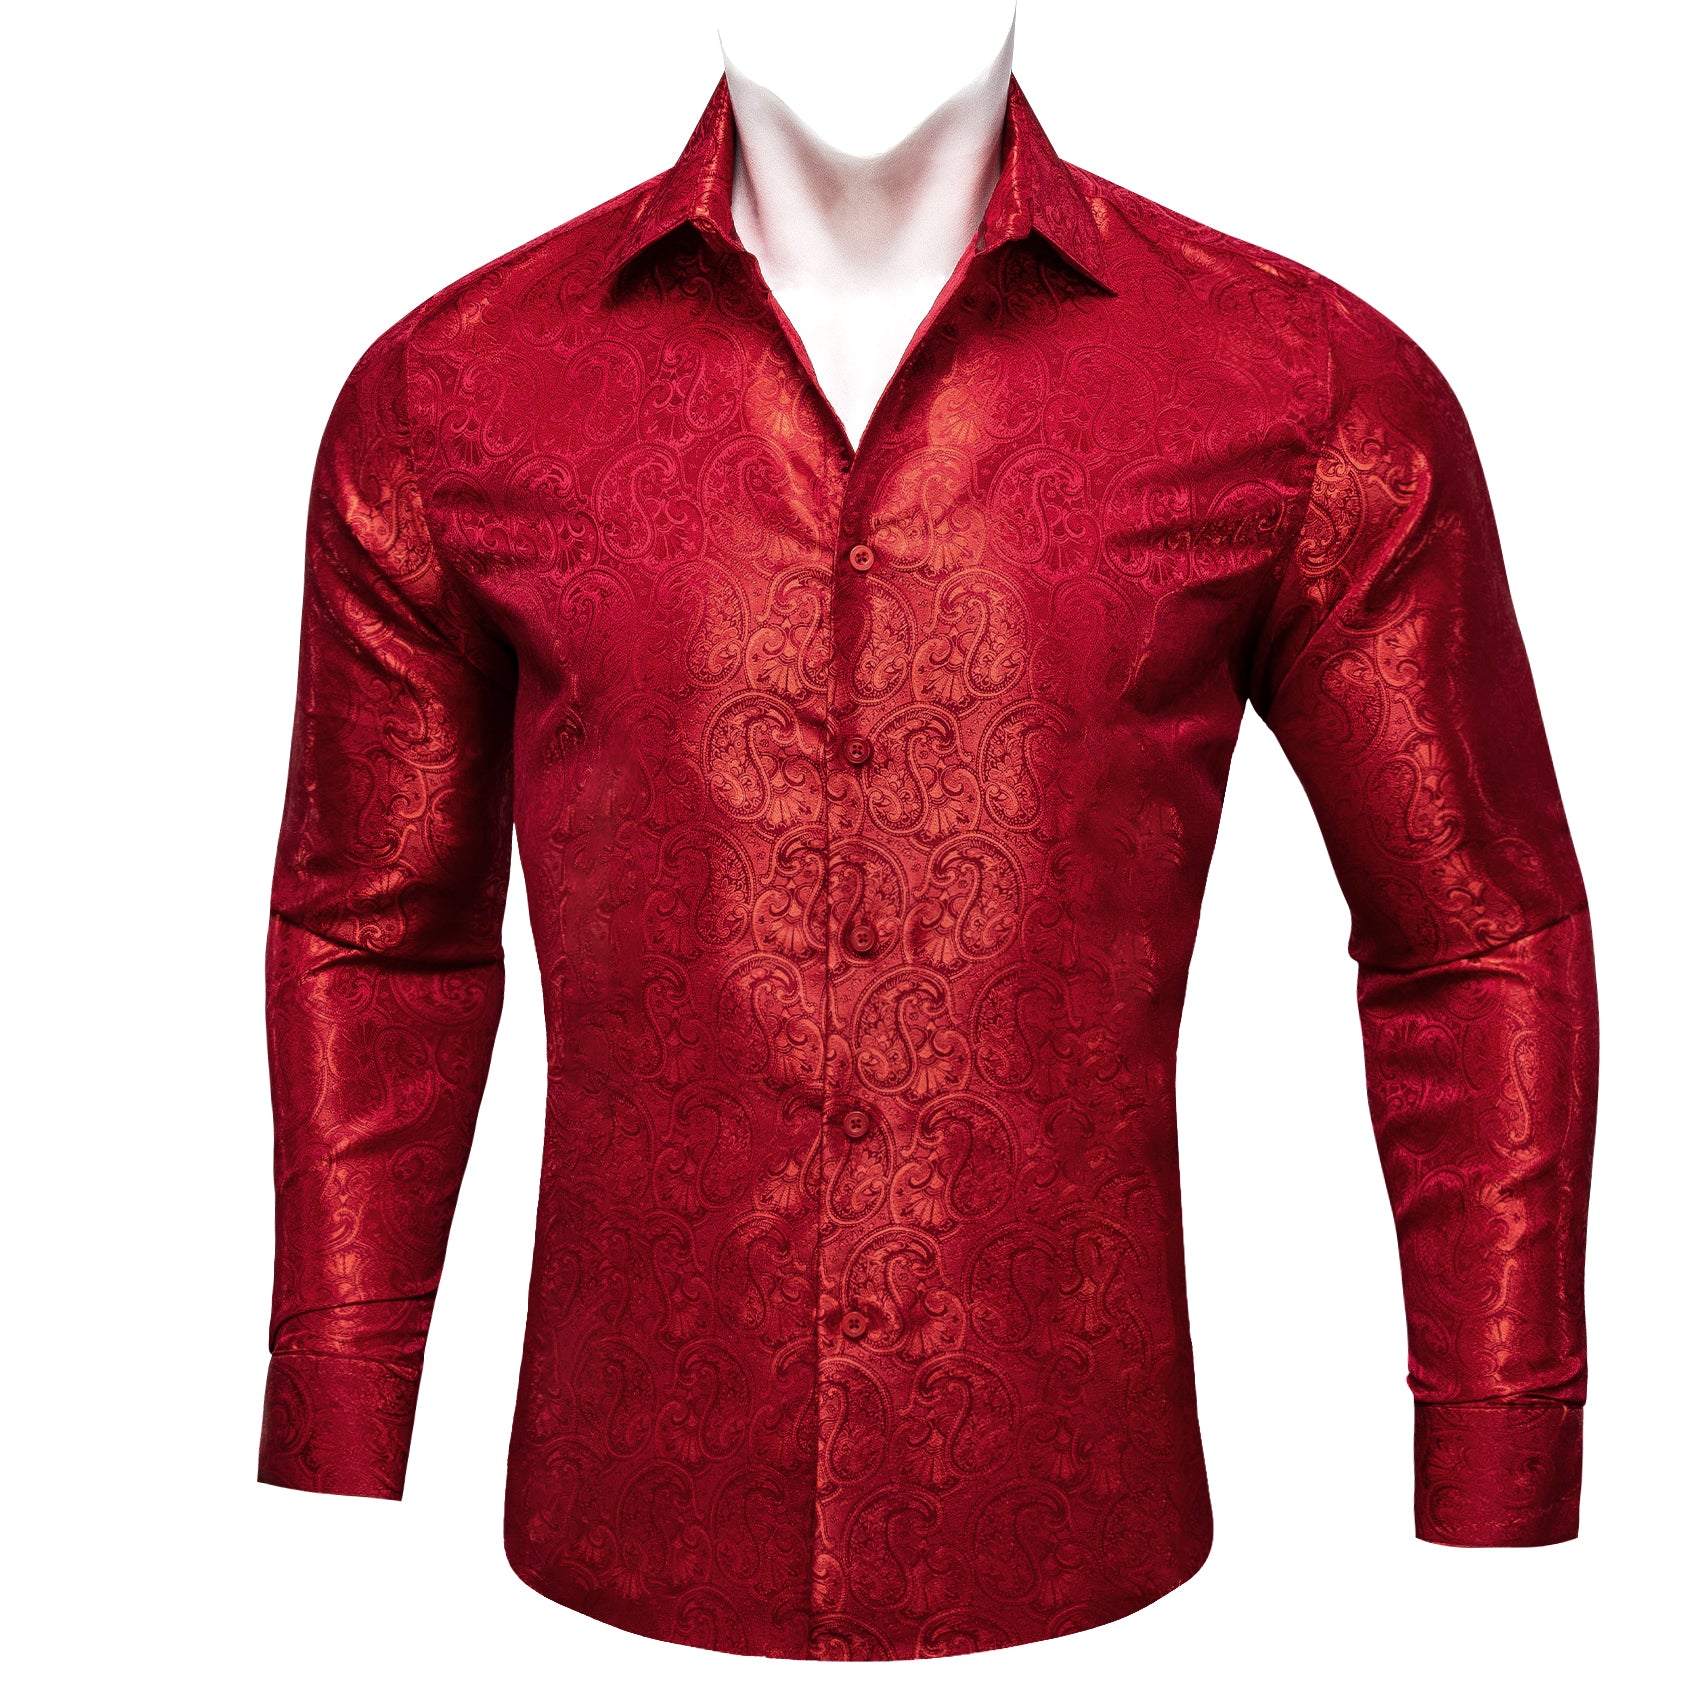 Barry.wang Strong Red Paisley Silk Men's Shirt